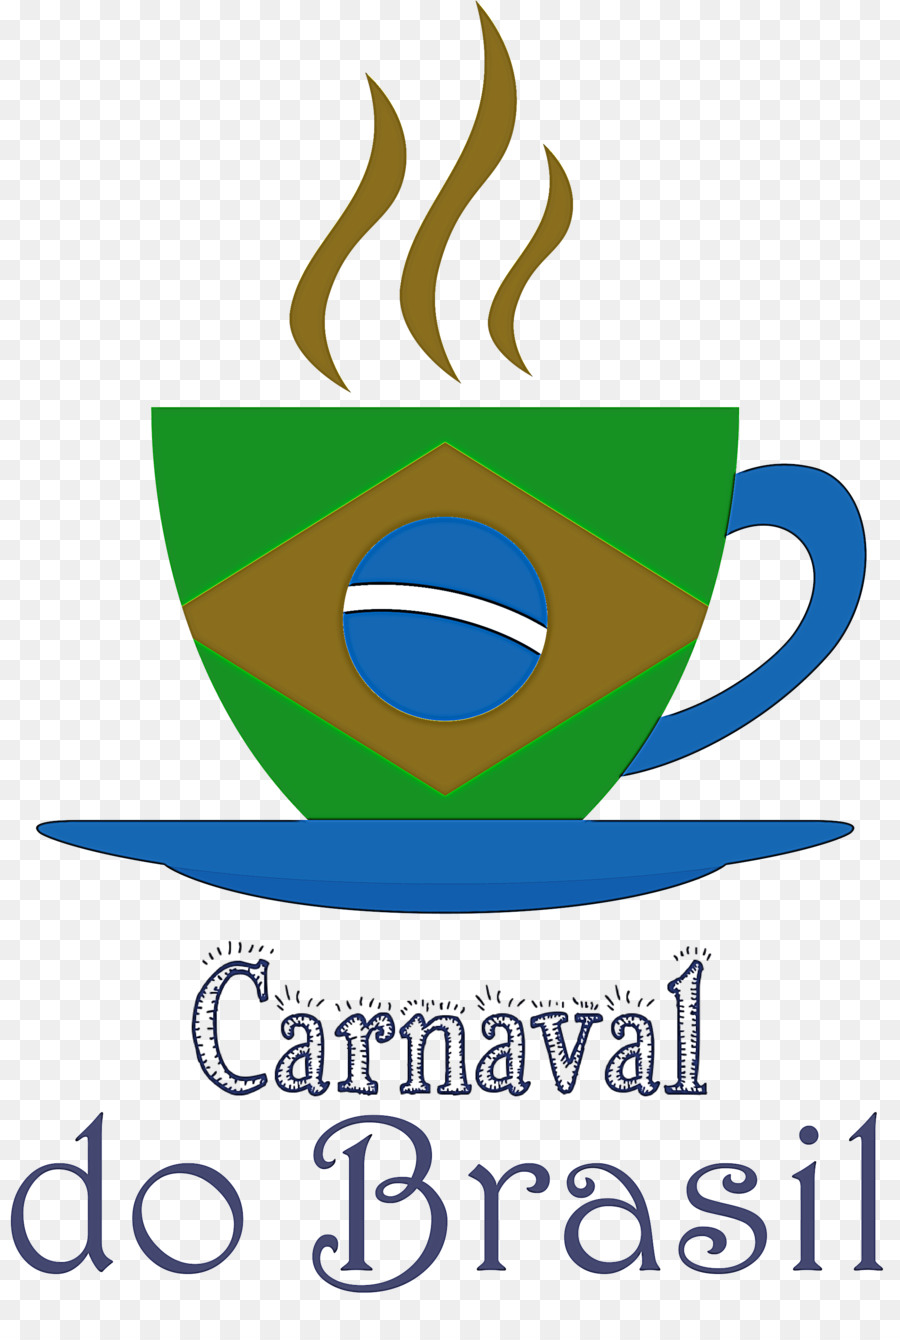 Brasilianischer Karneval Carnaval do Brasil - 